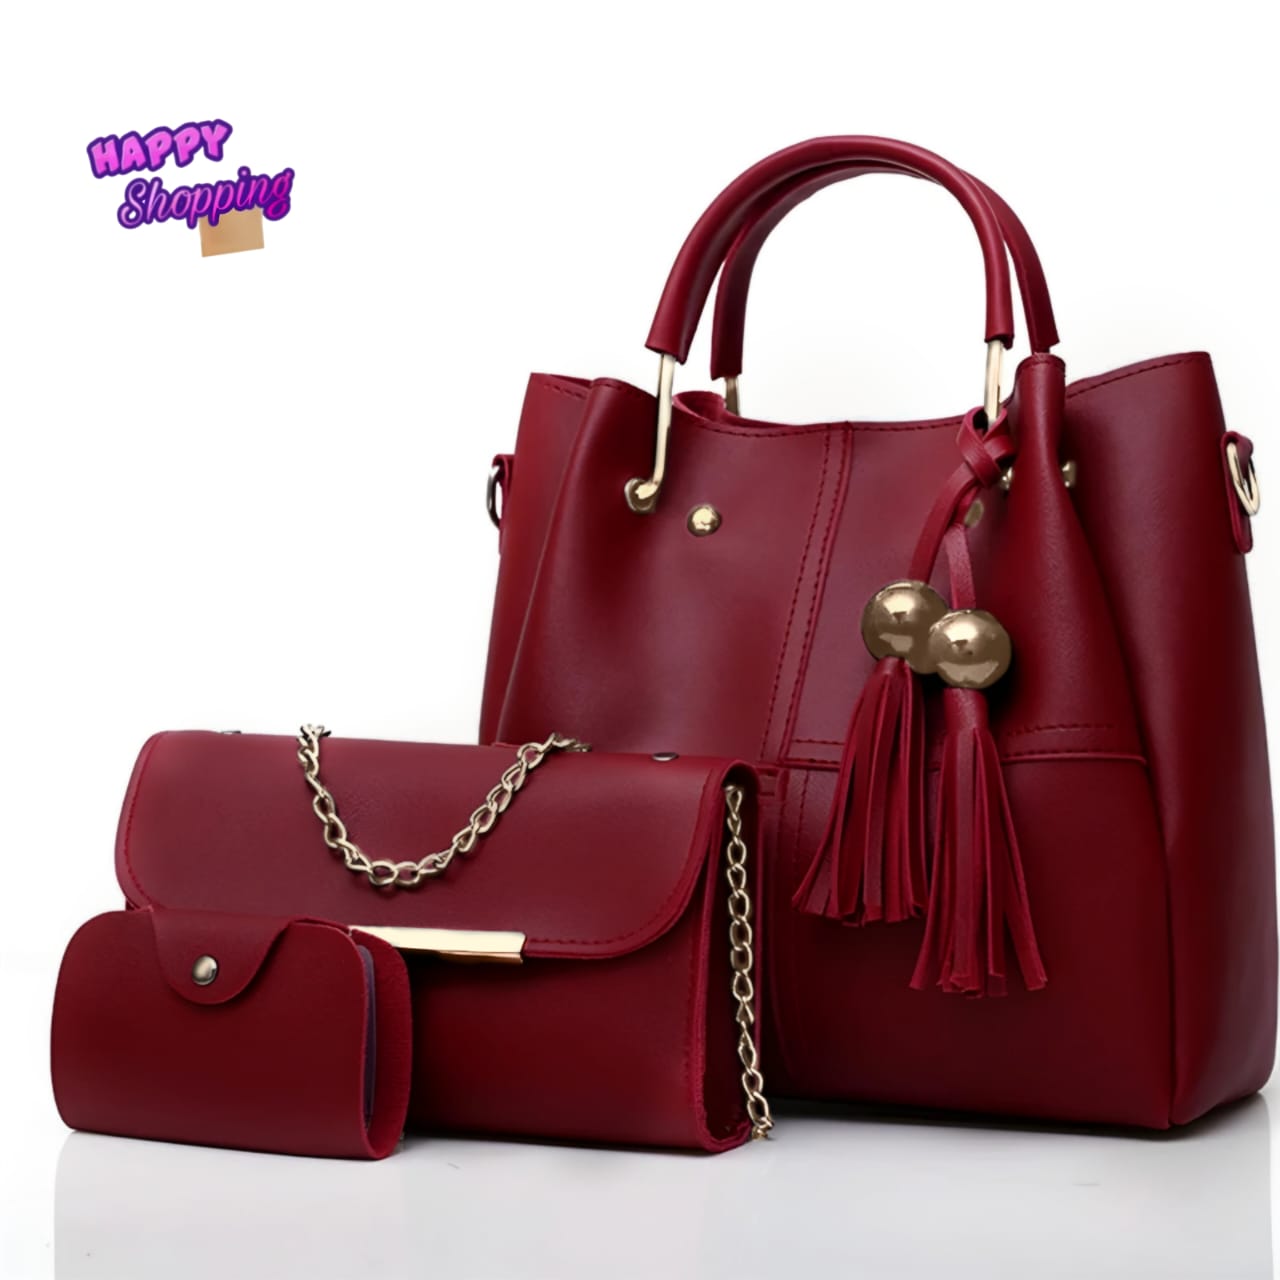 3 in 1 Amazing Quality Handbag Set